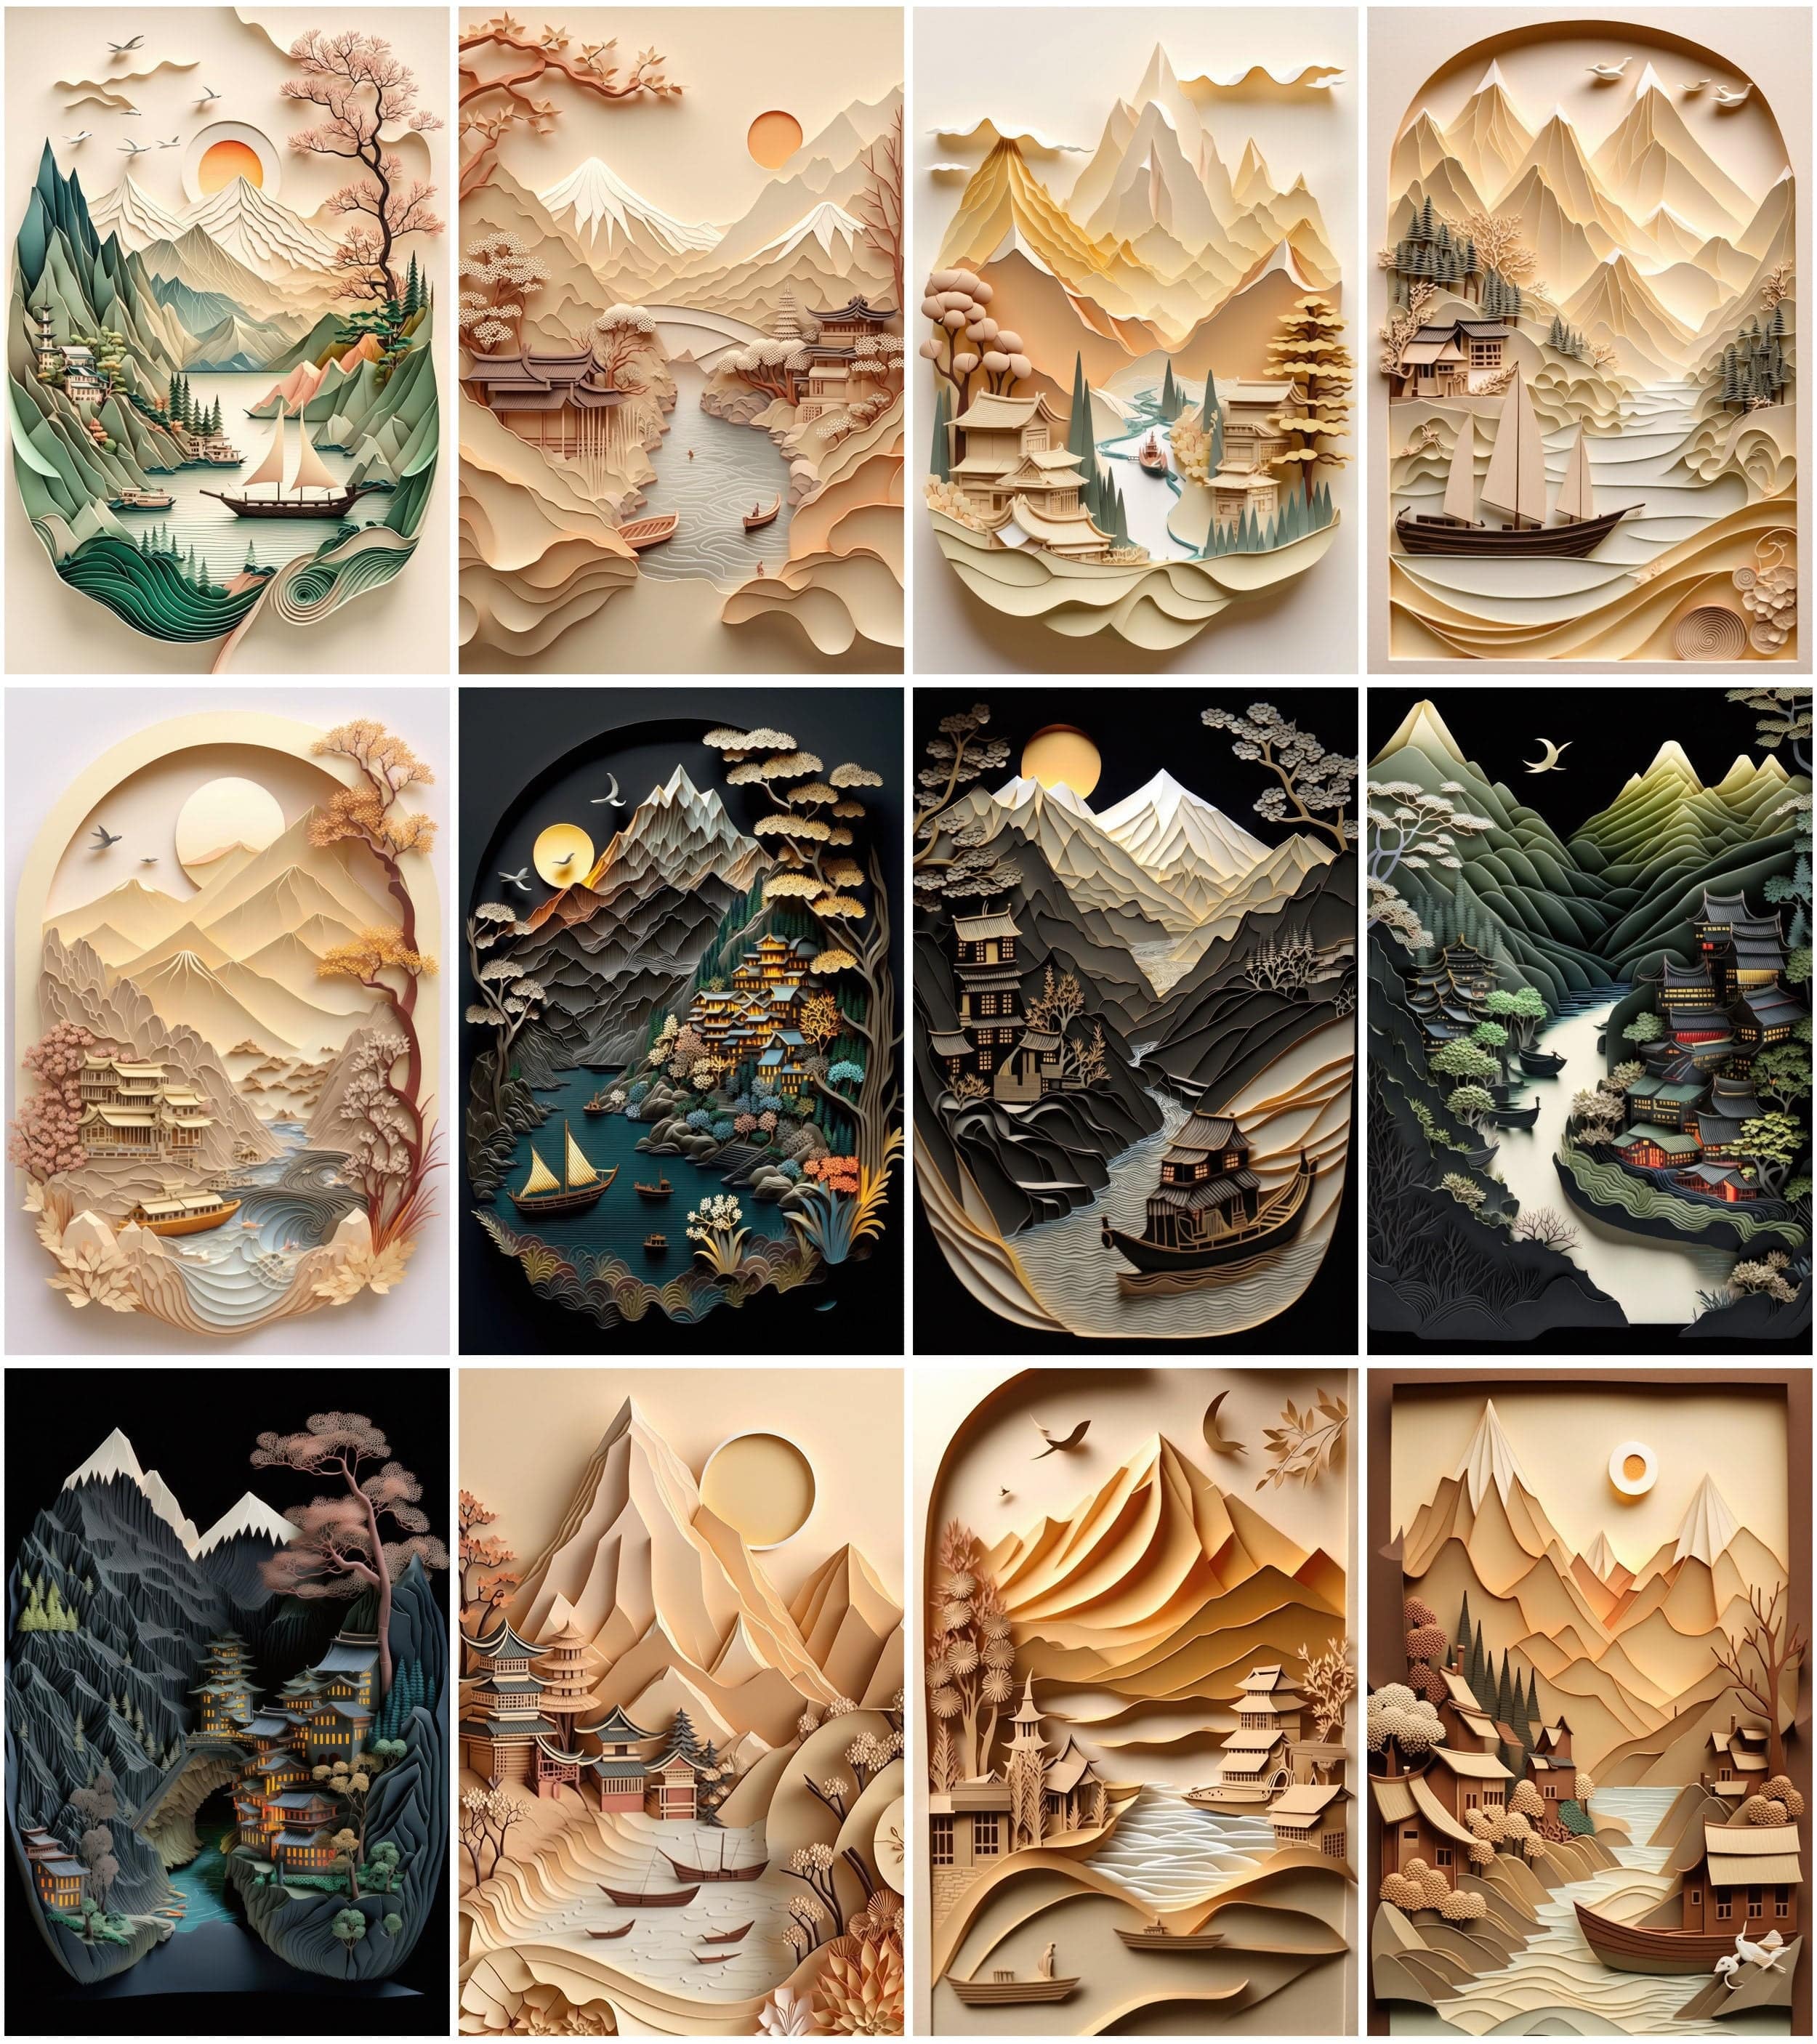 65 Plasticine Pictures Bundle, Colorful Clay Art, Handmade Modelling Clay Images Digital Download Sumobundle